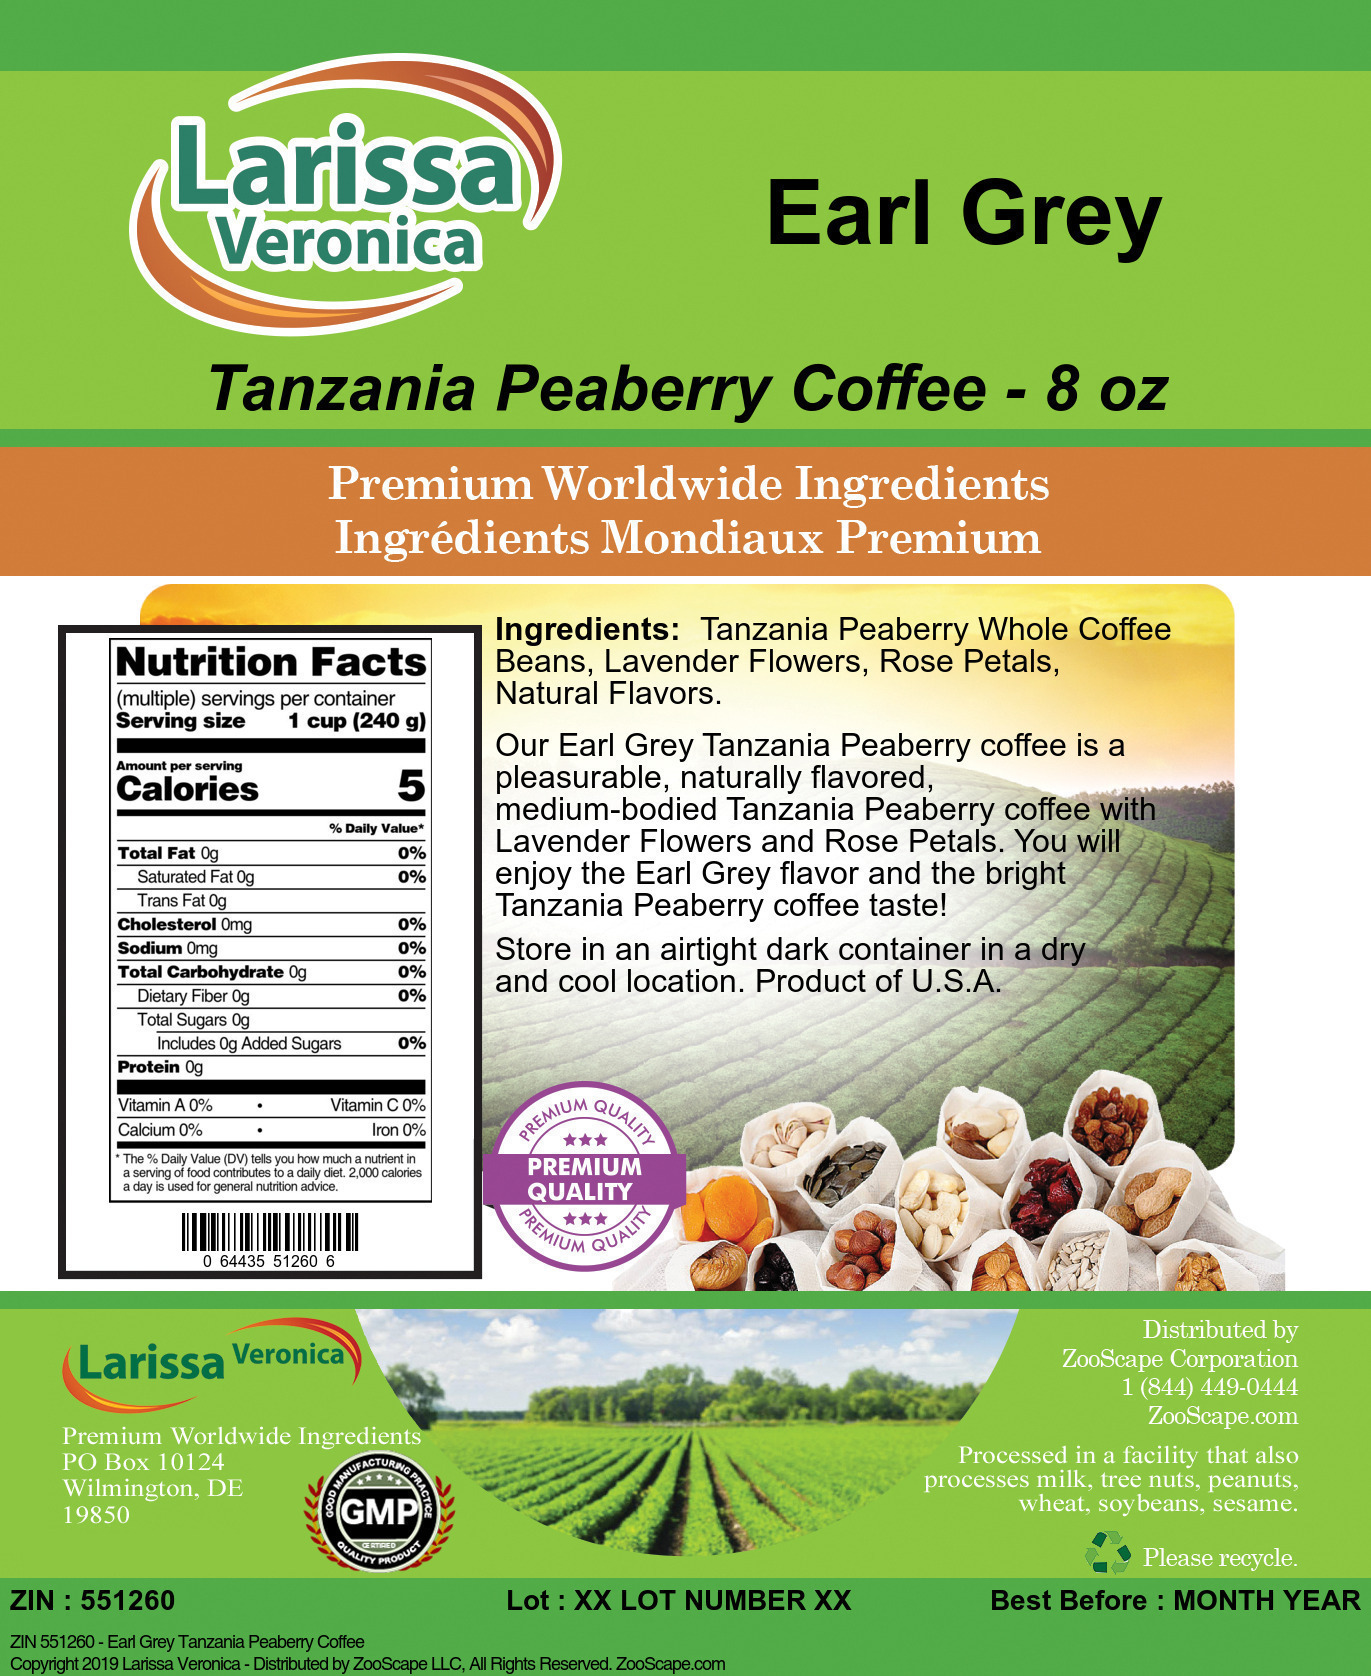 Earl Grey Tanzania Peaberry Coffee - Label